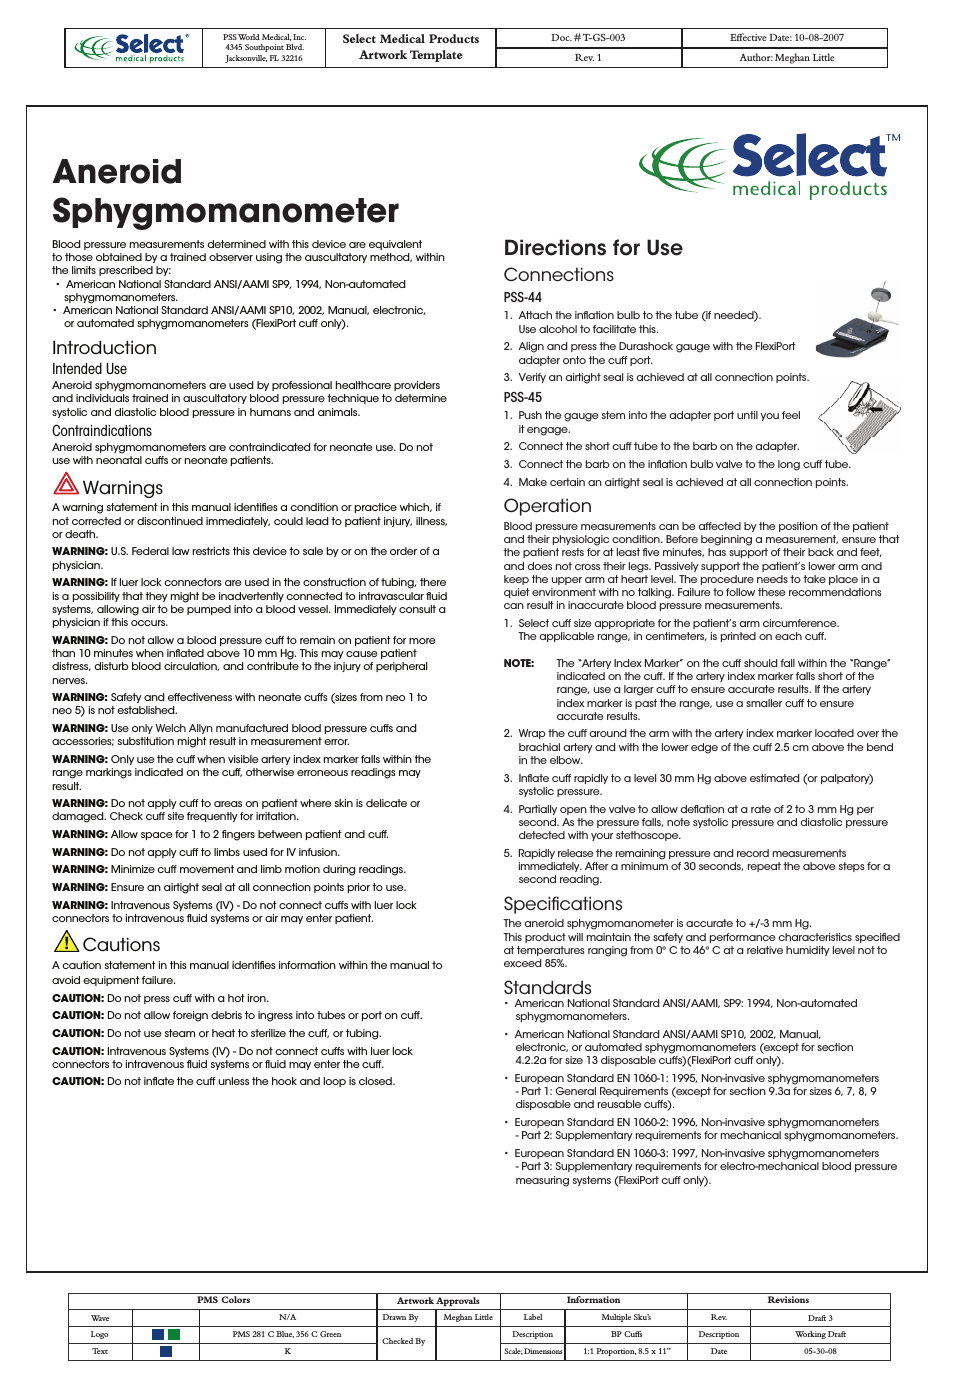 Aneroid Sphygmomanometer - User Manual